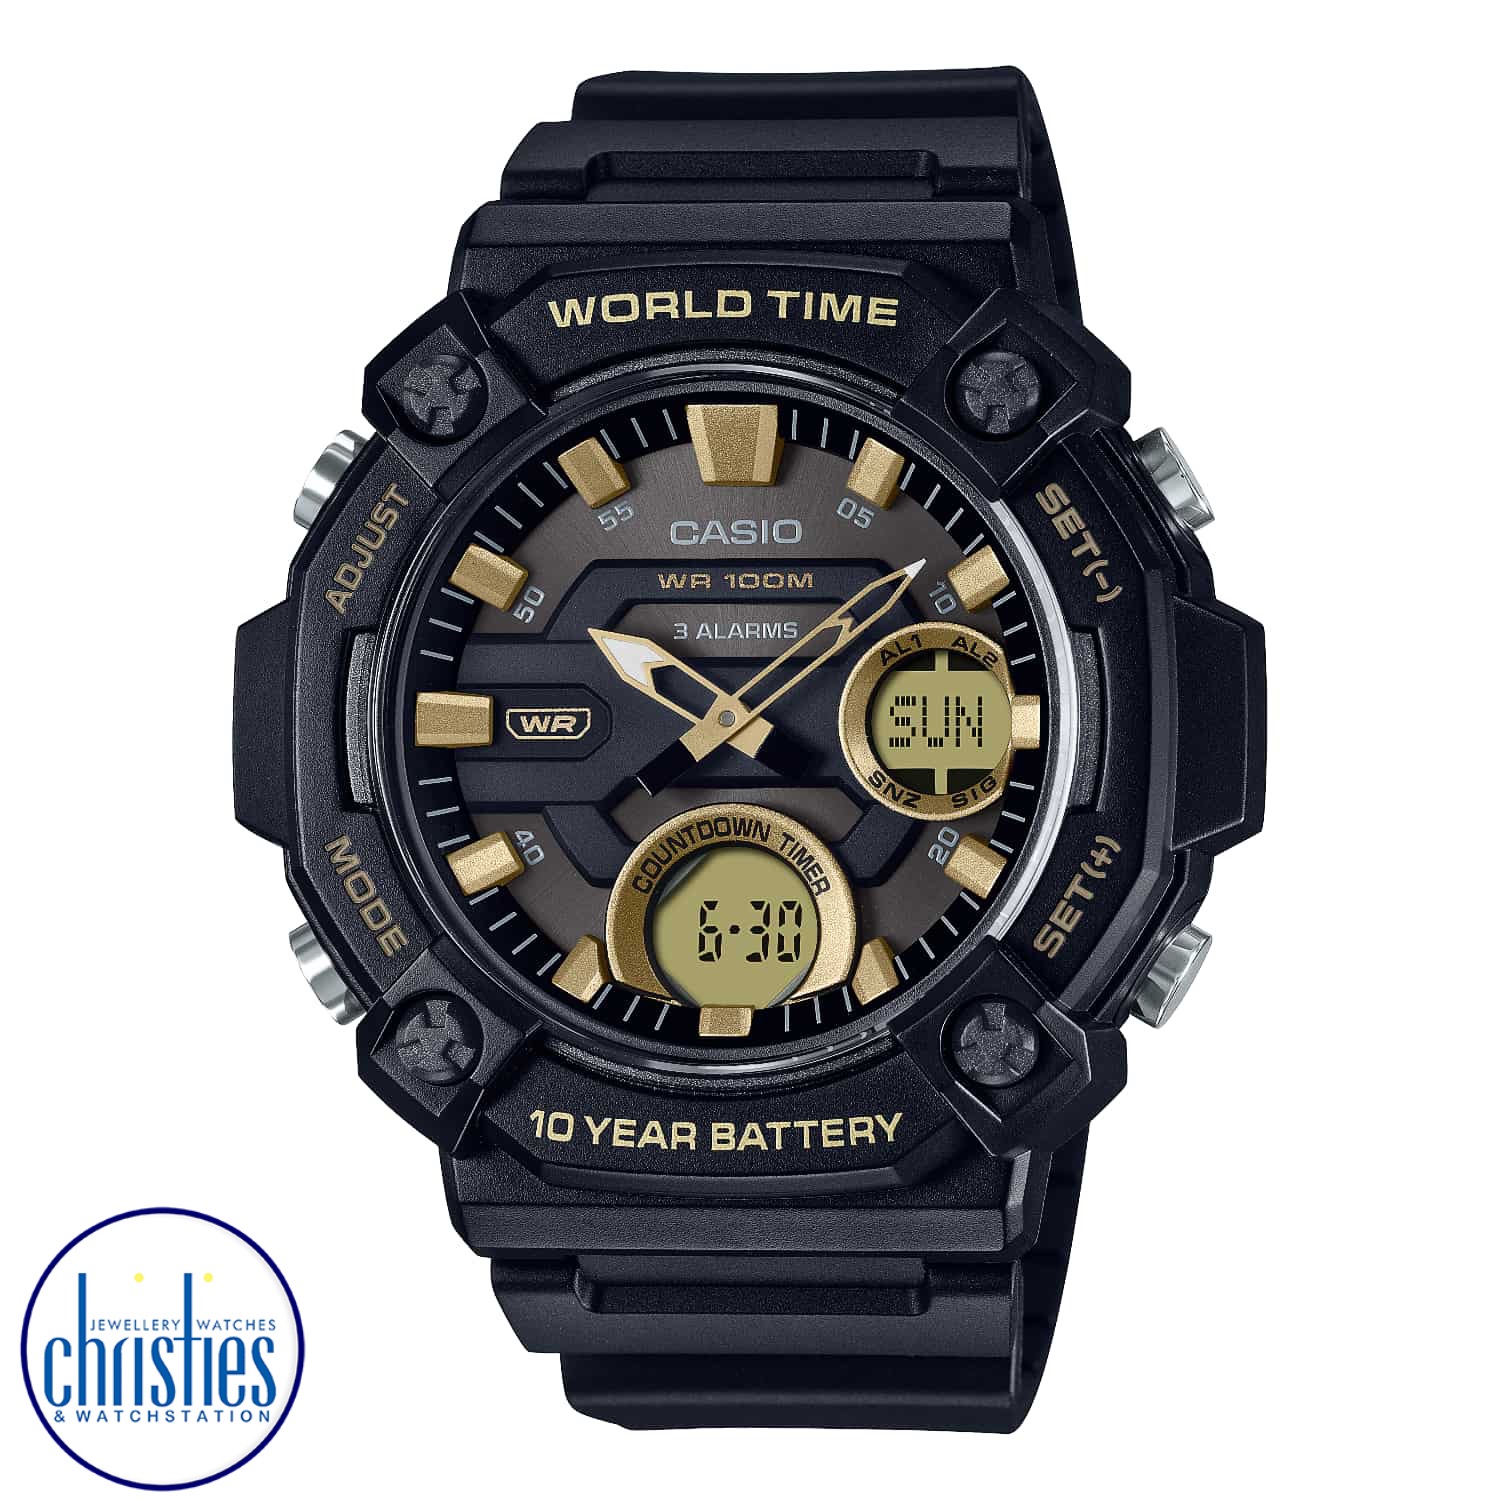 AEQ120W-9A Casio 100 Metre 10 Year Battery Watch cheap casio watches nz